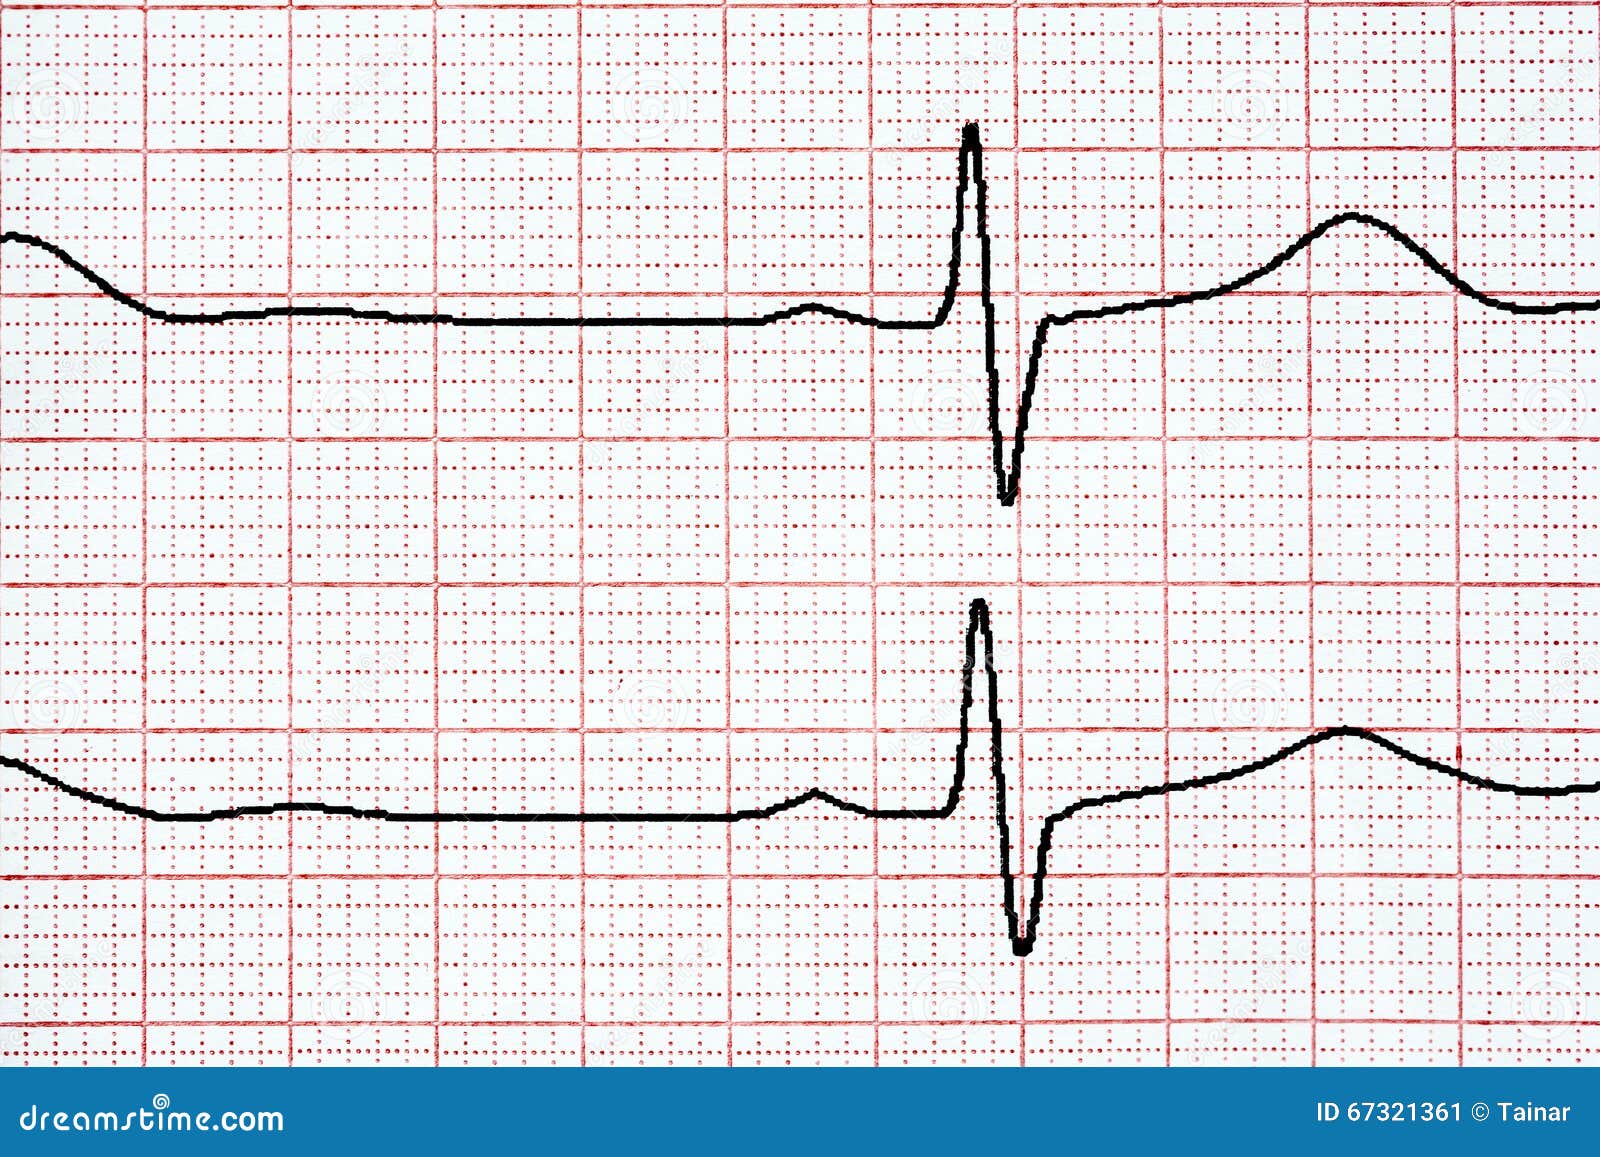 Cardiology Birthday Chart